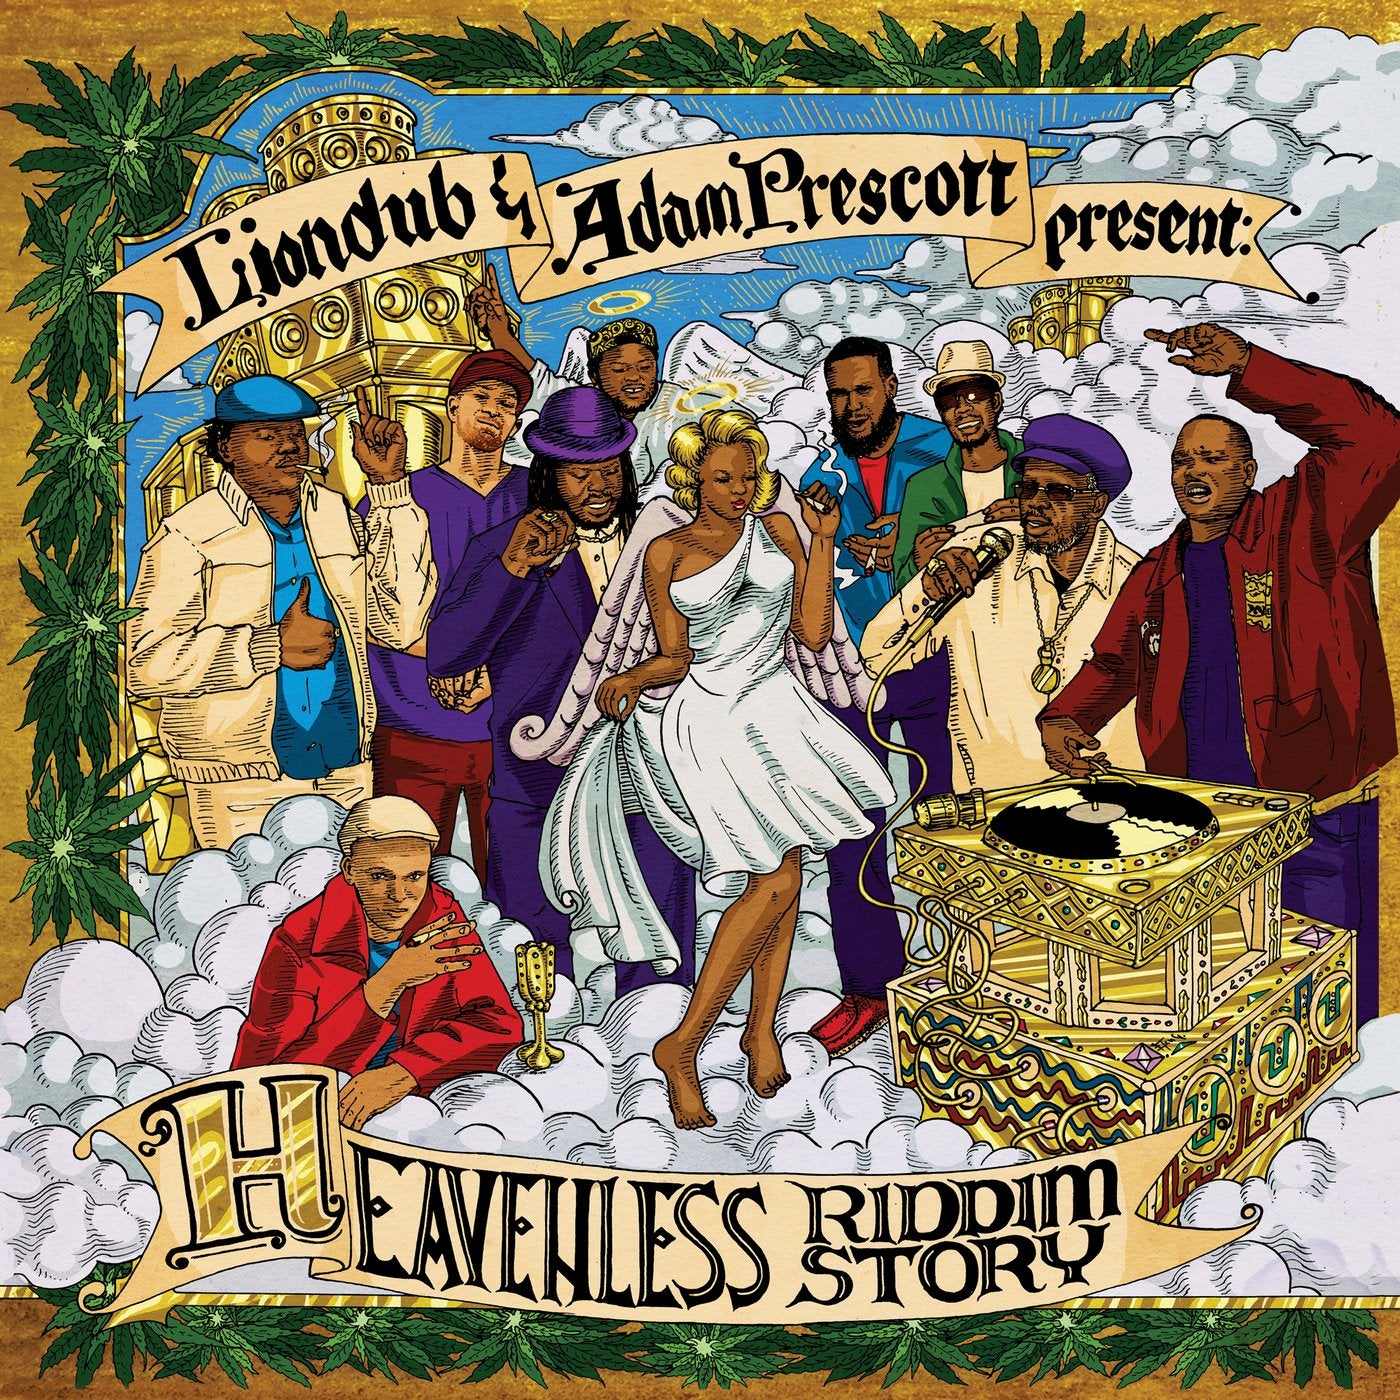 Liondub & Adam Prescott Present: Heavenless Riddim Story